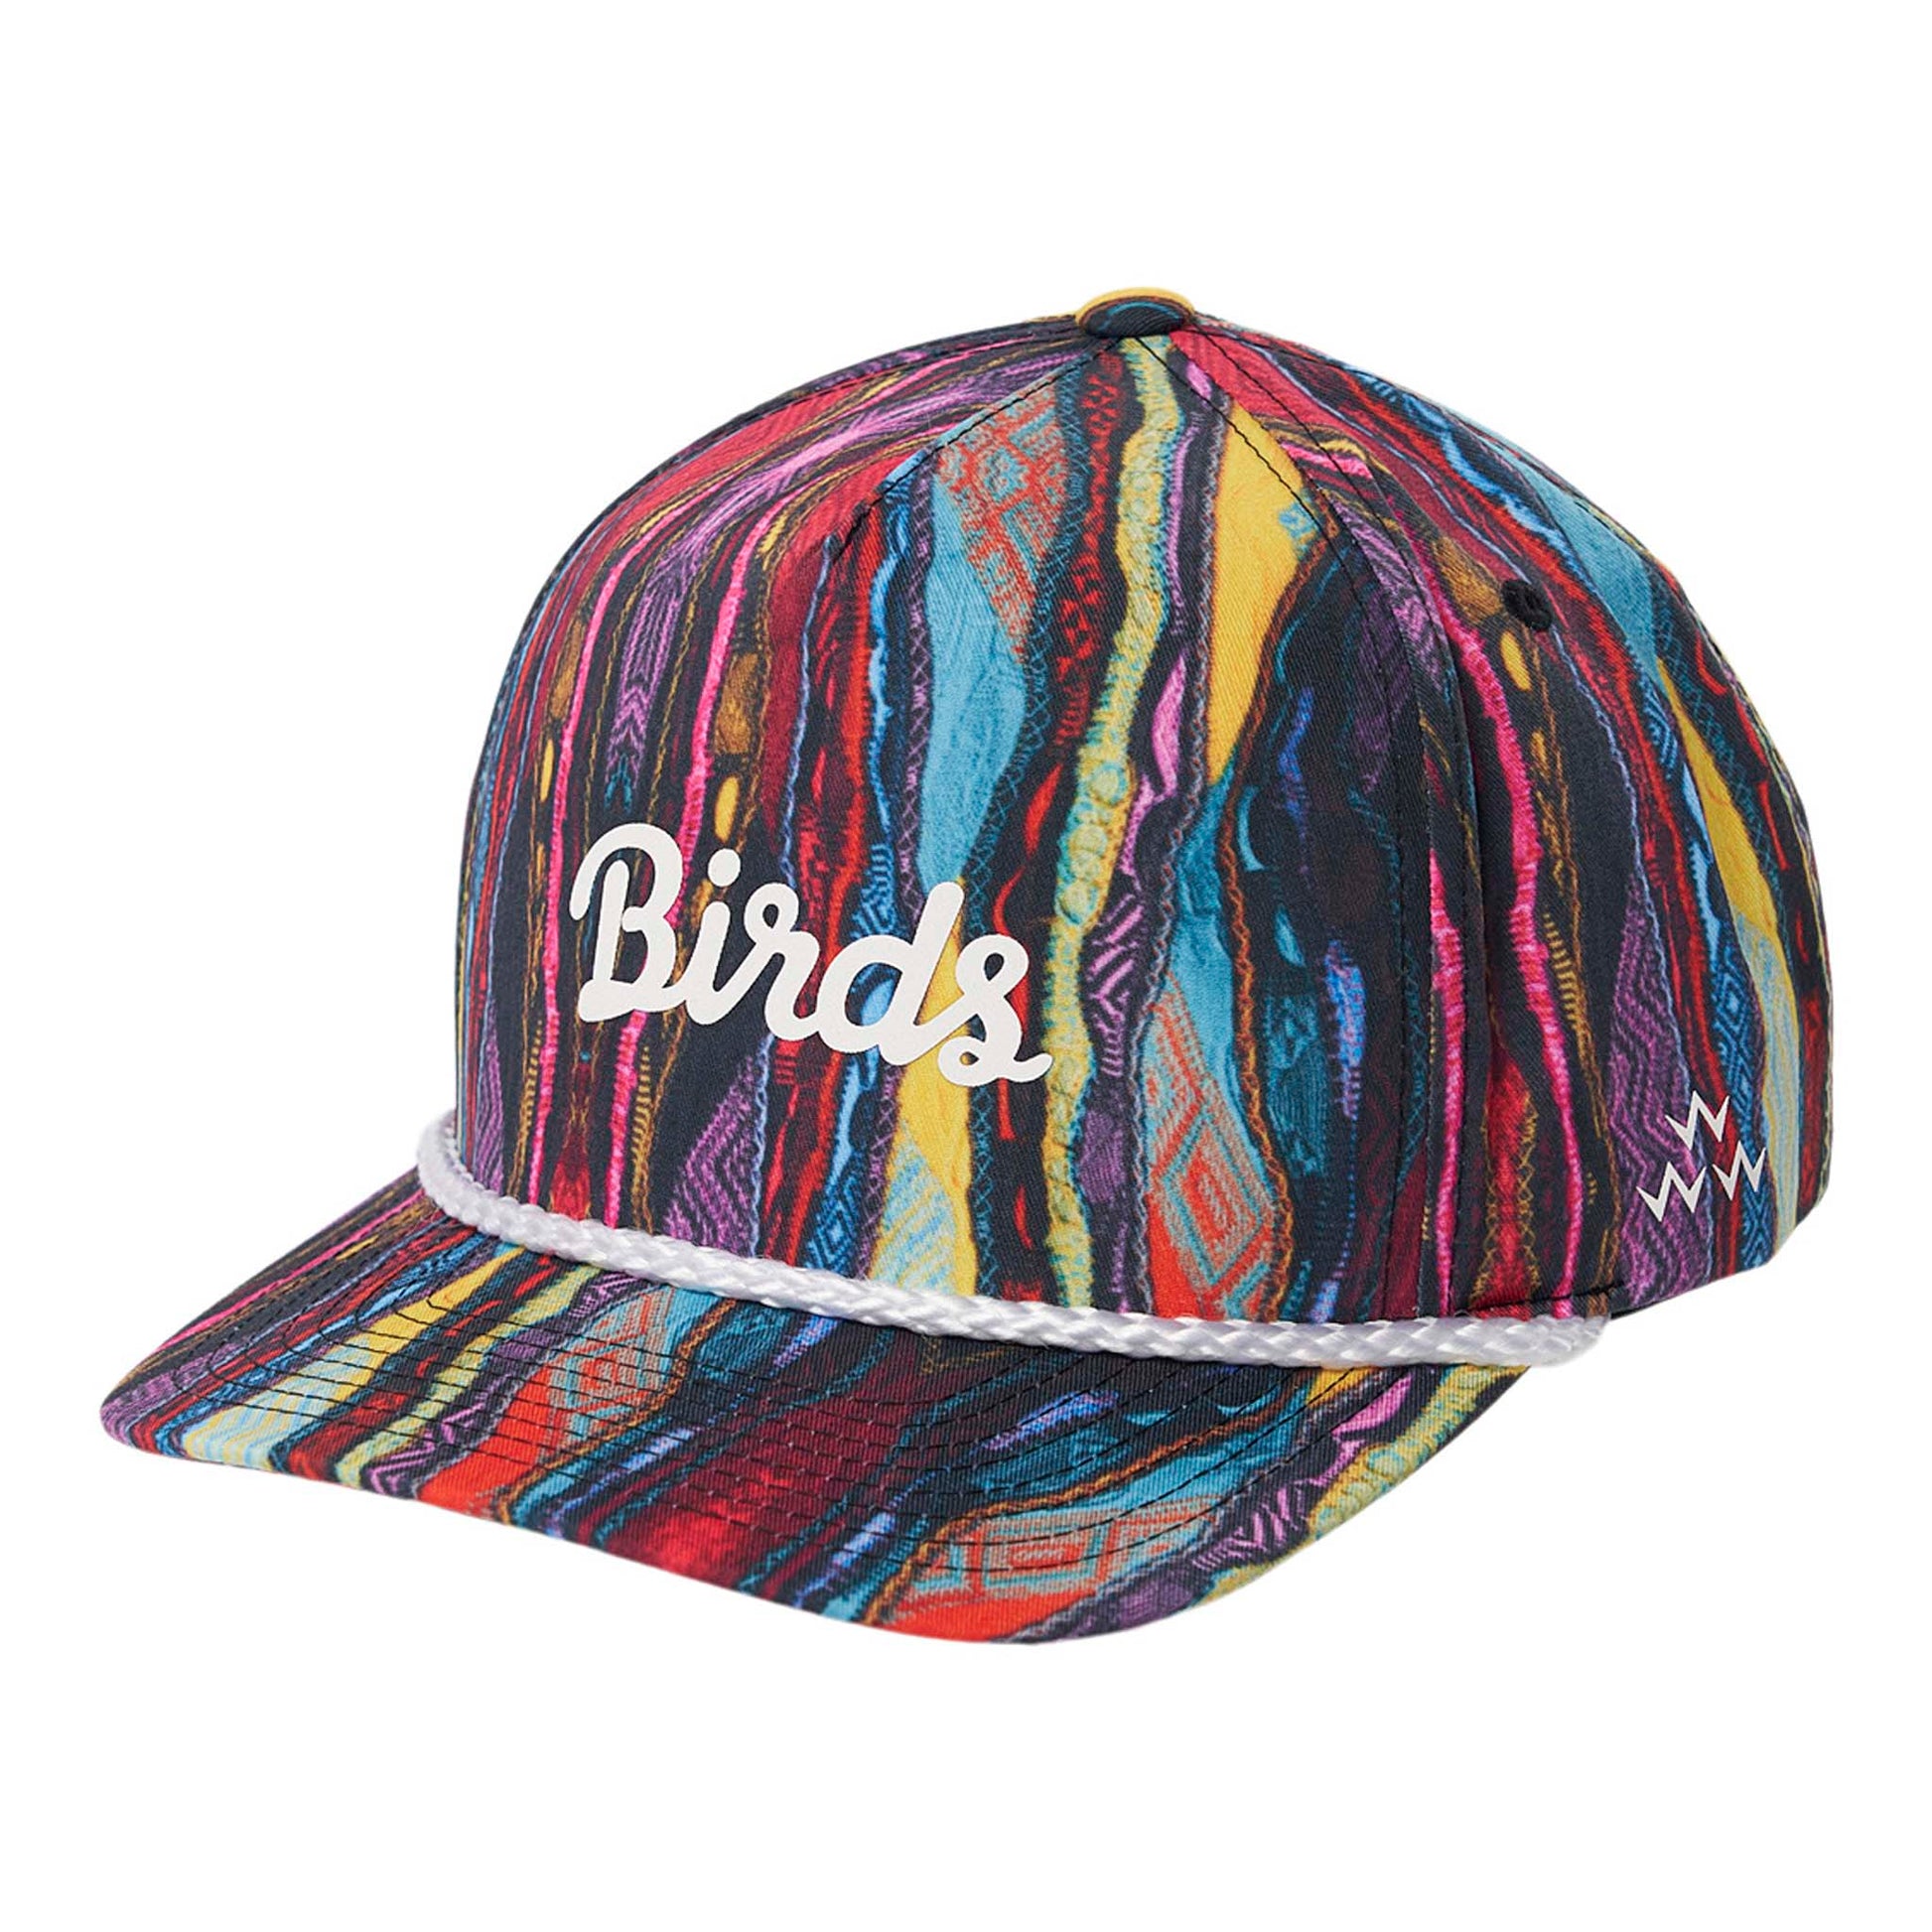 birds of condor coogi brand biggie smalls print snapback golf rope street style hat cap